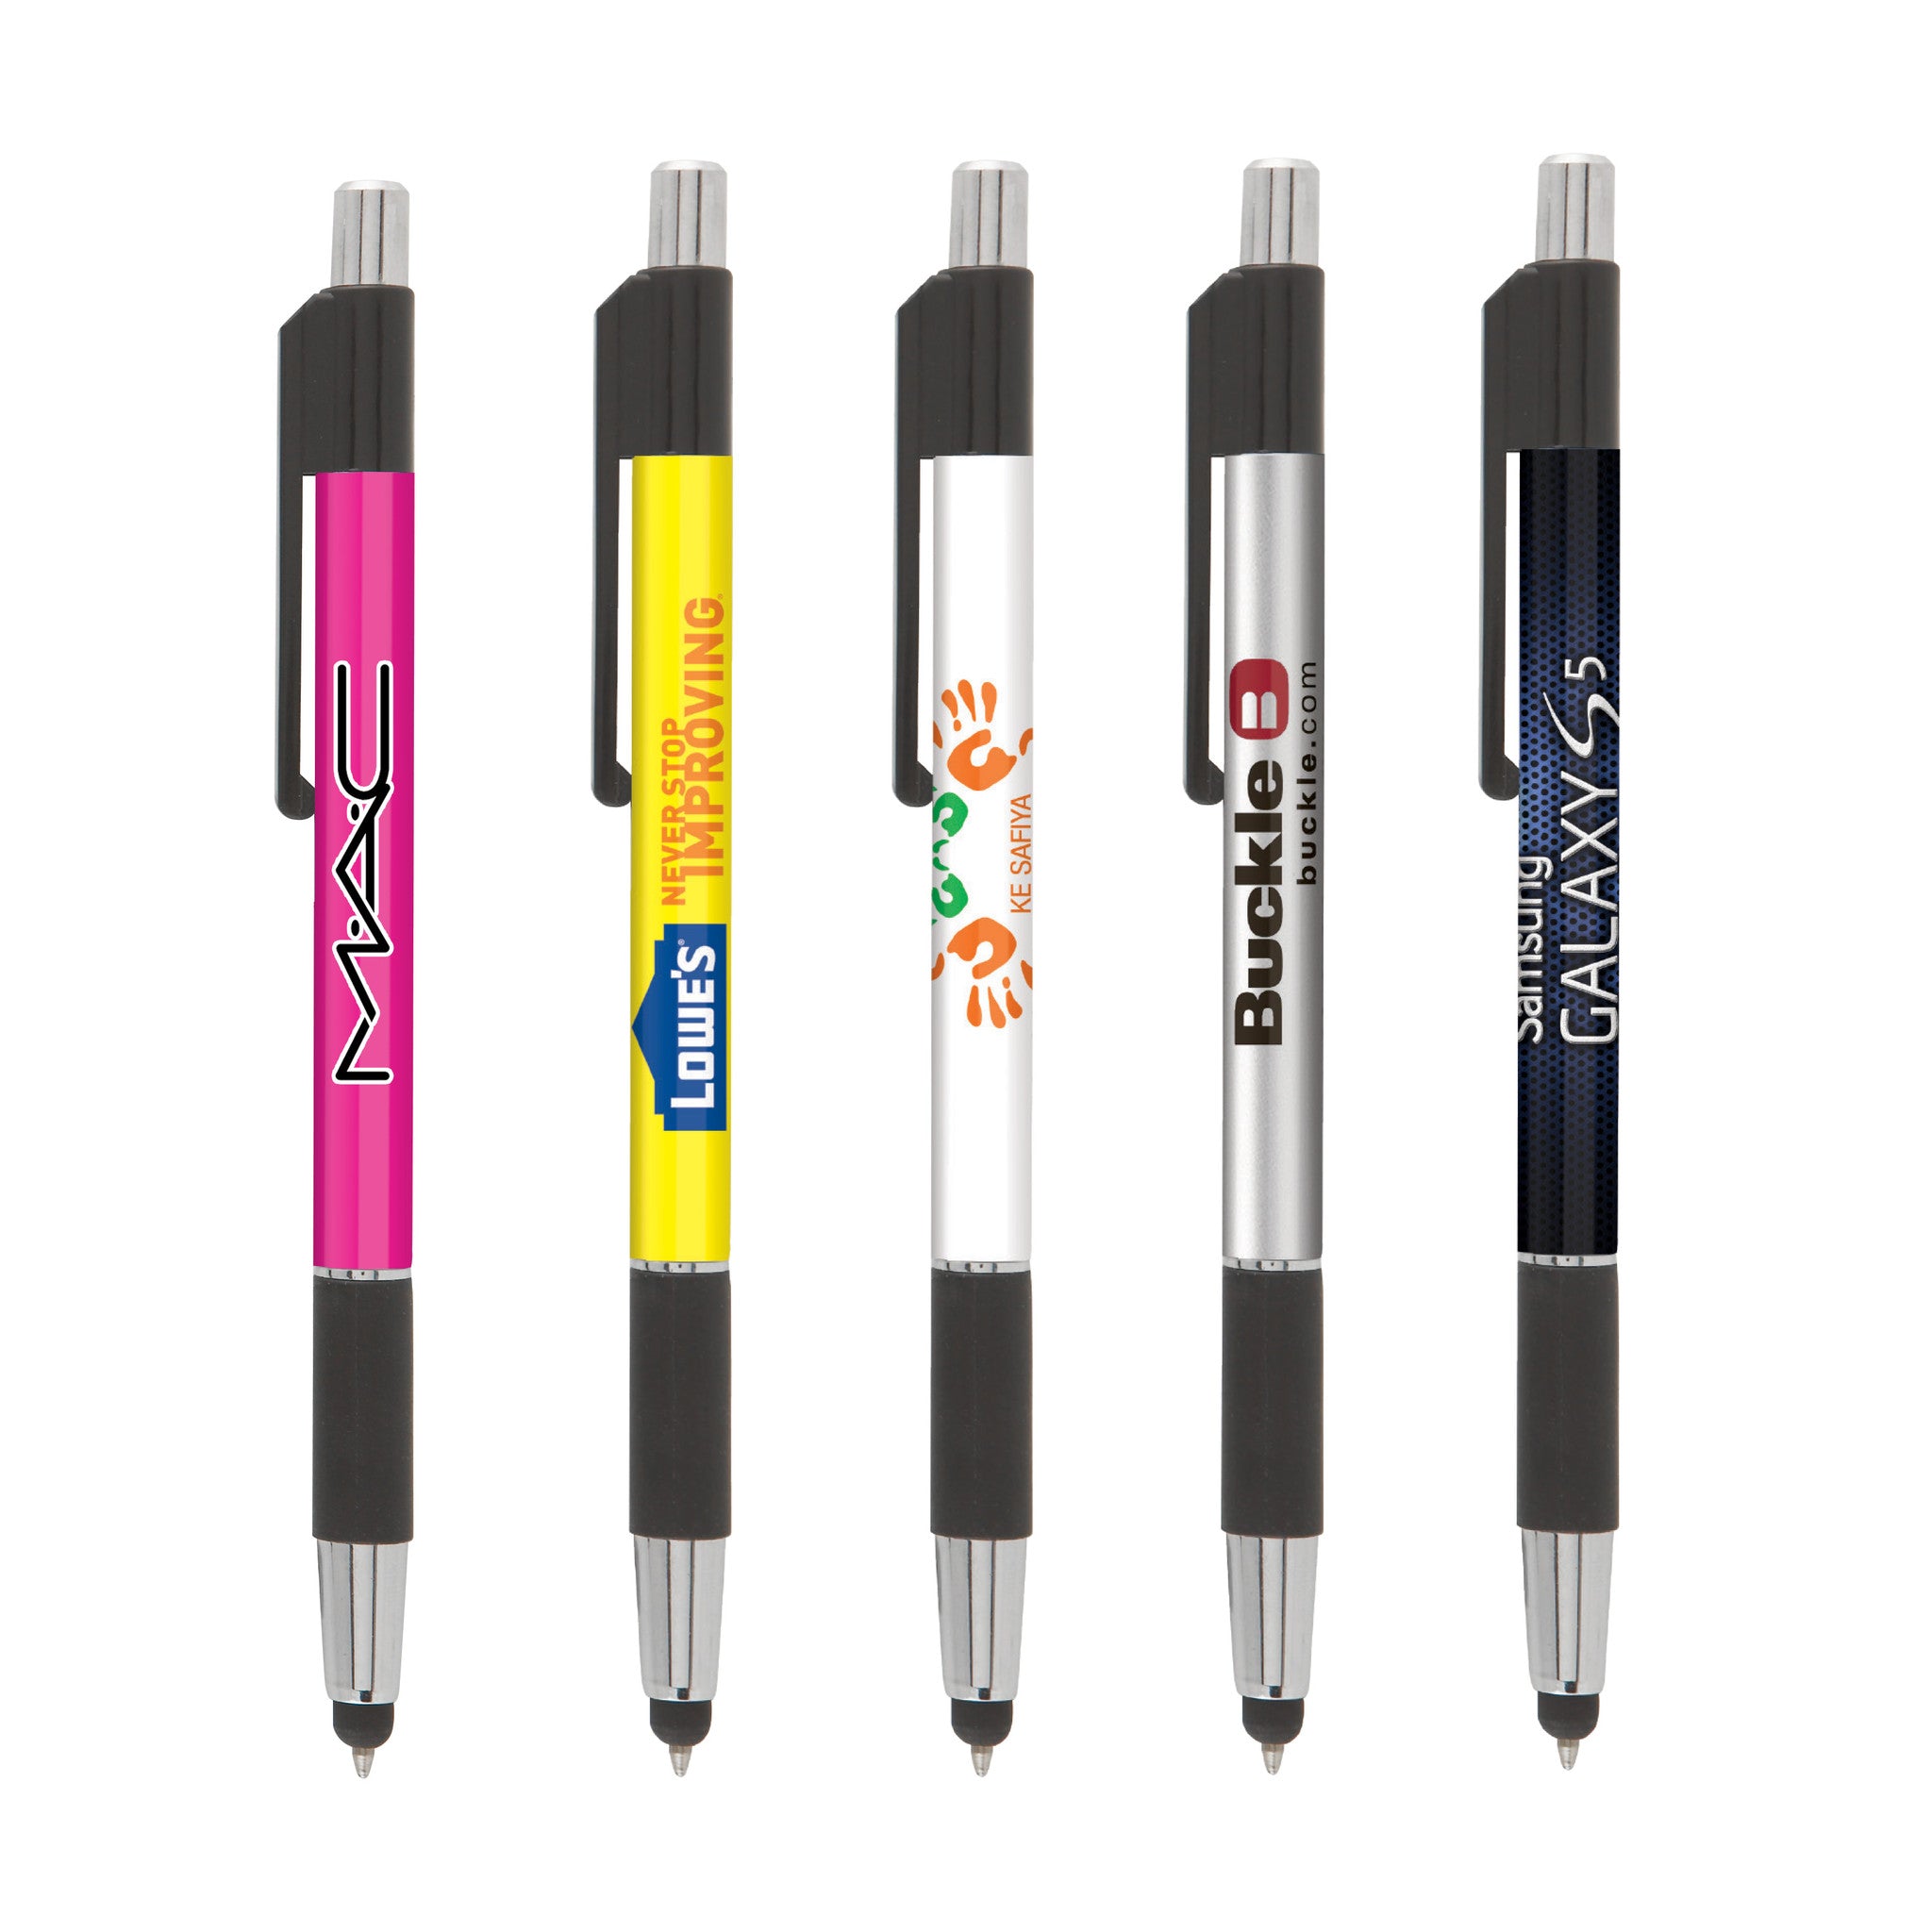 Slender Stylus Pen with Full Color Imprint